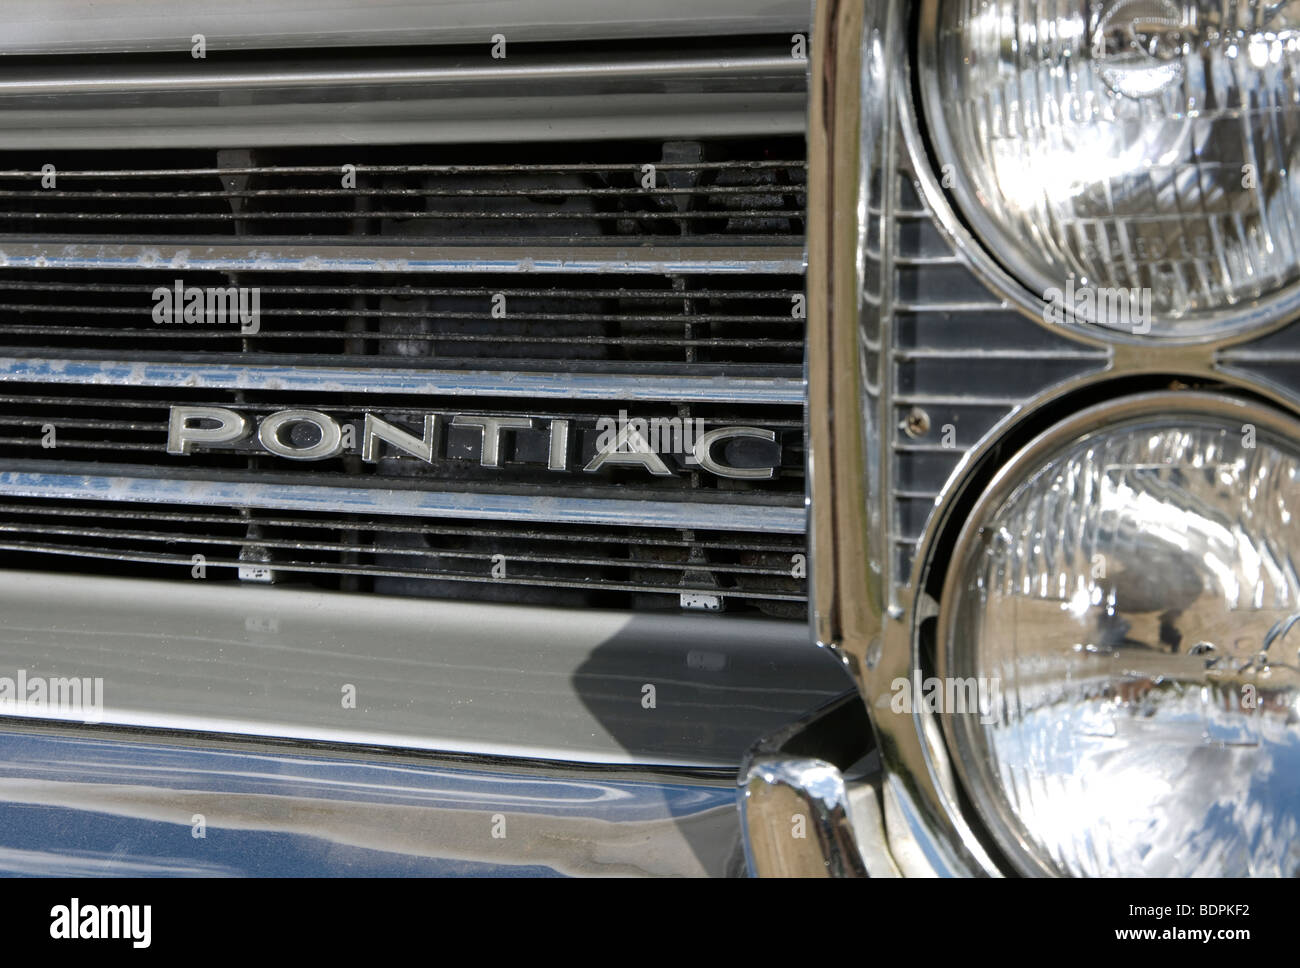 Pontiac badge on 1964 Pontiac Parisienne American station wagon estate car Stock Photo